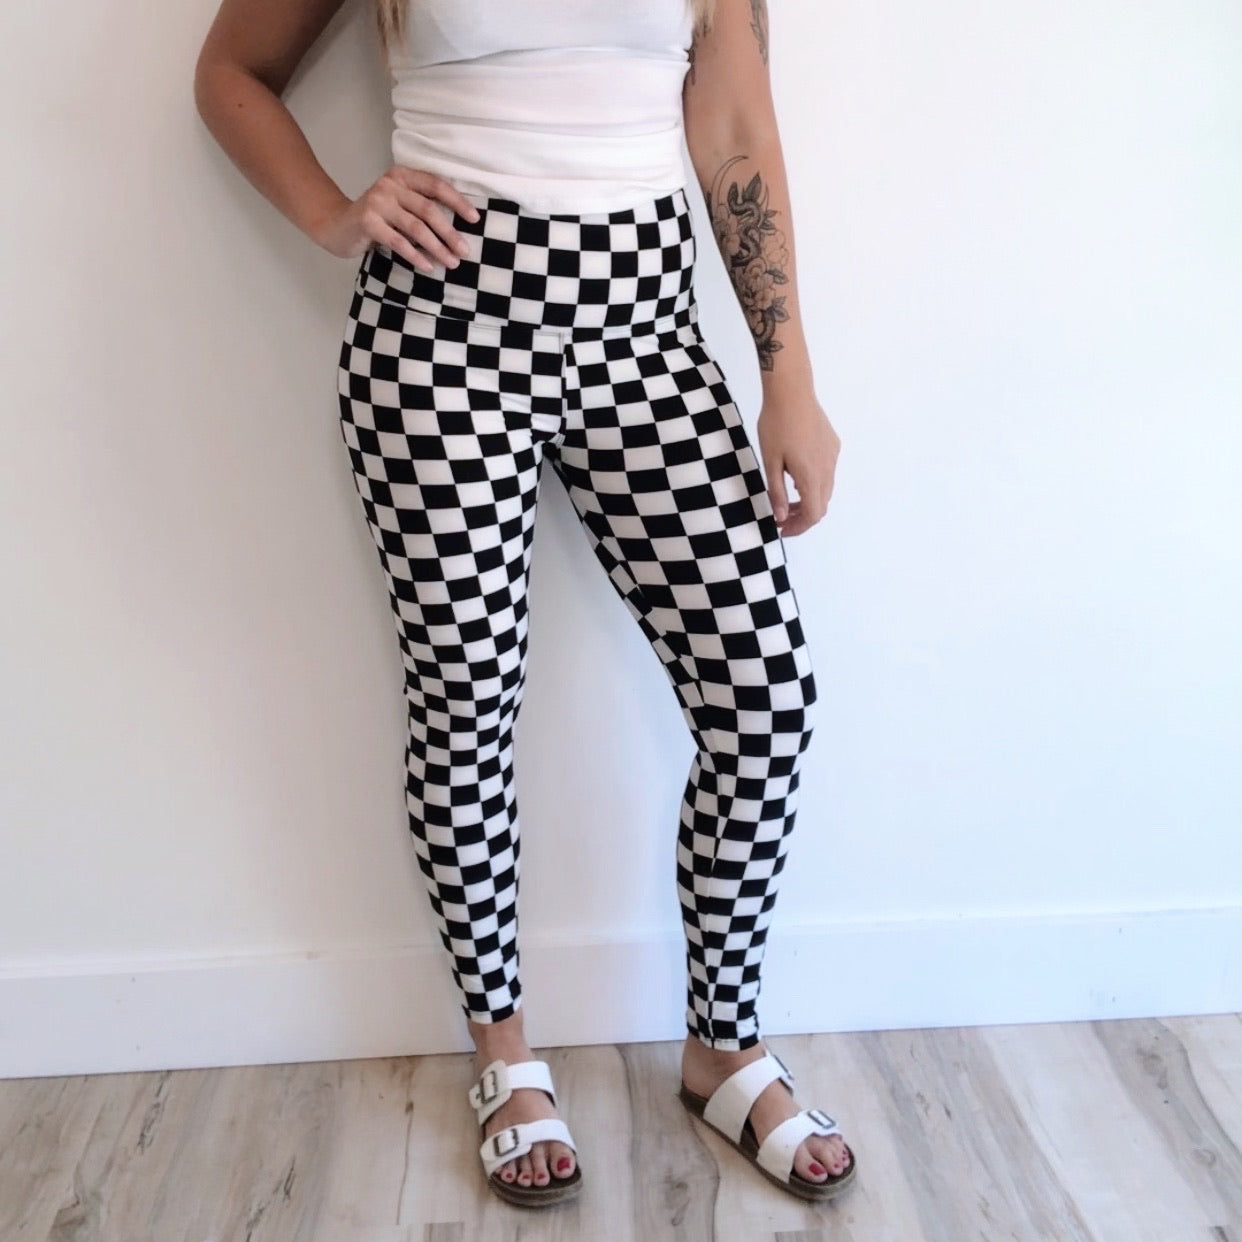 Checkered legging